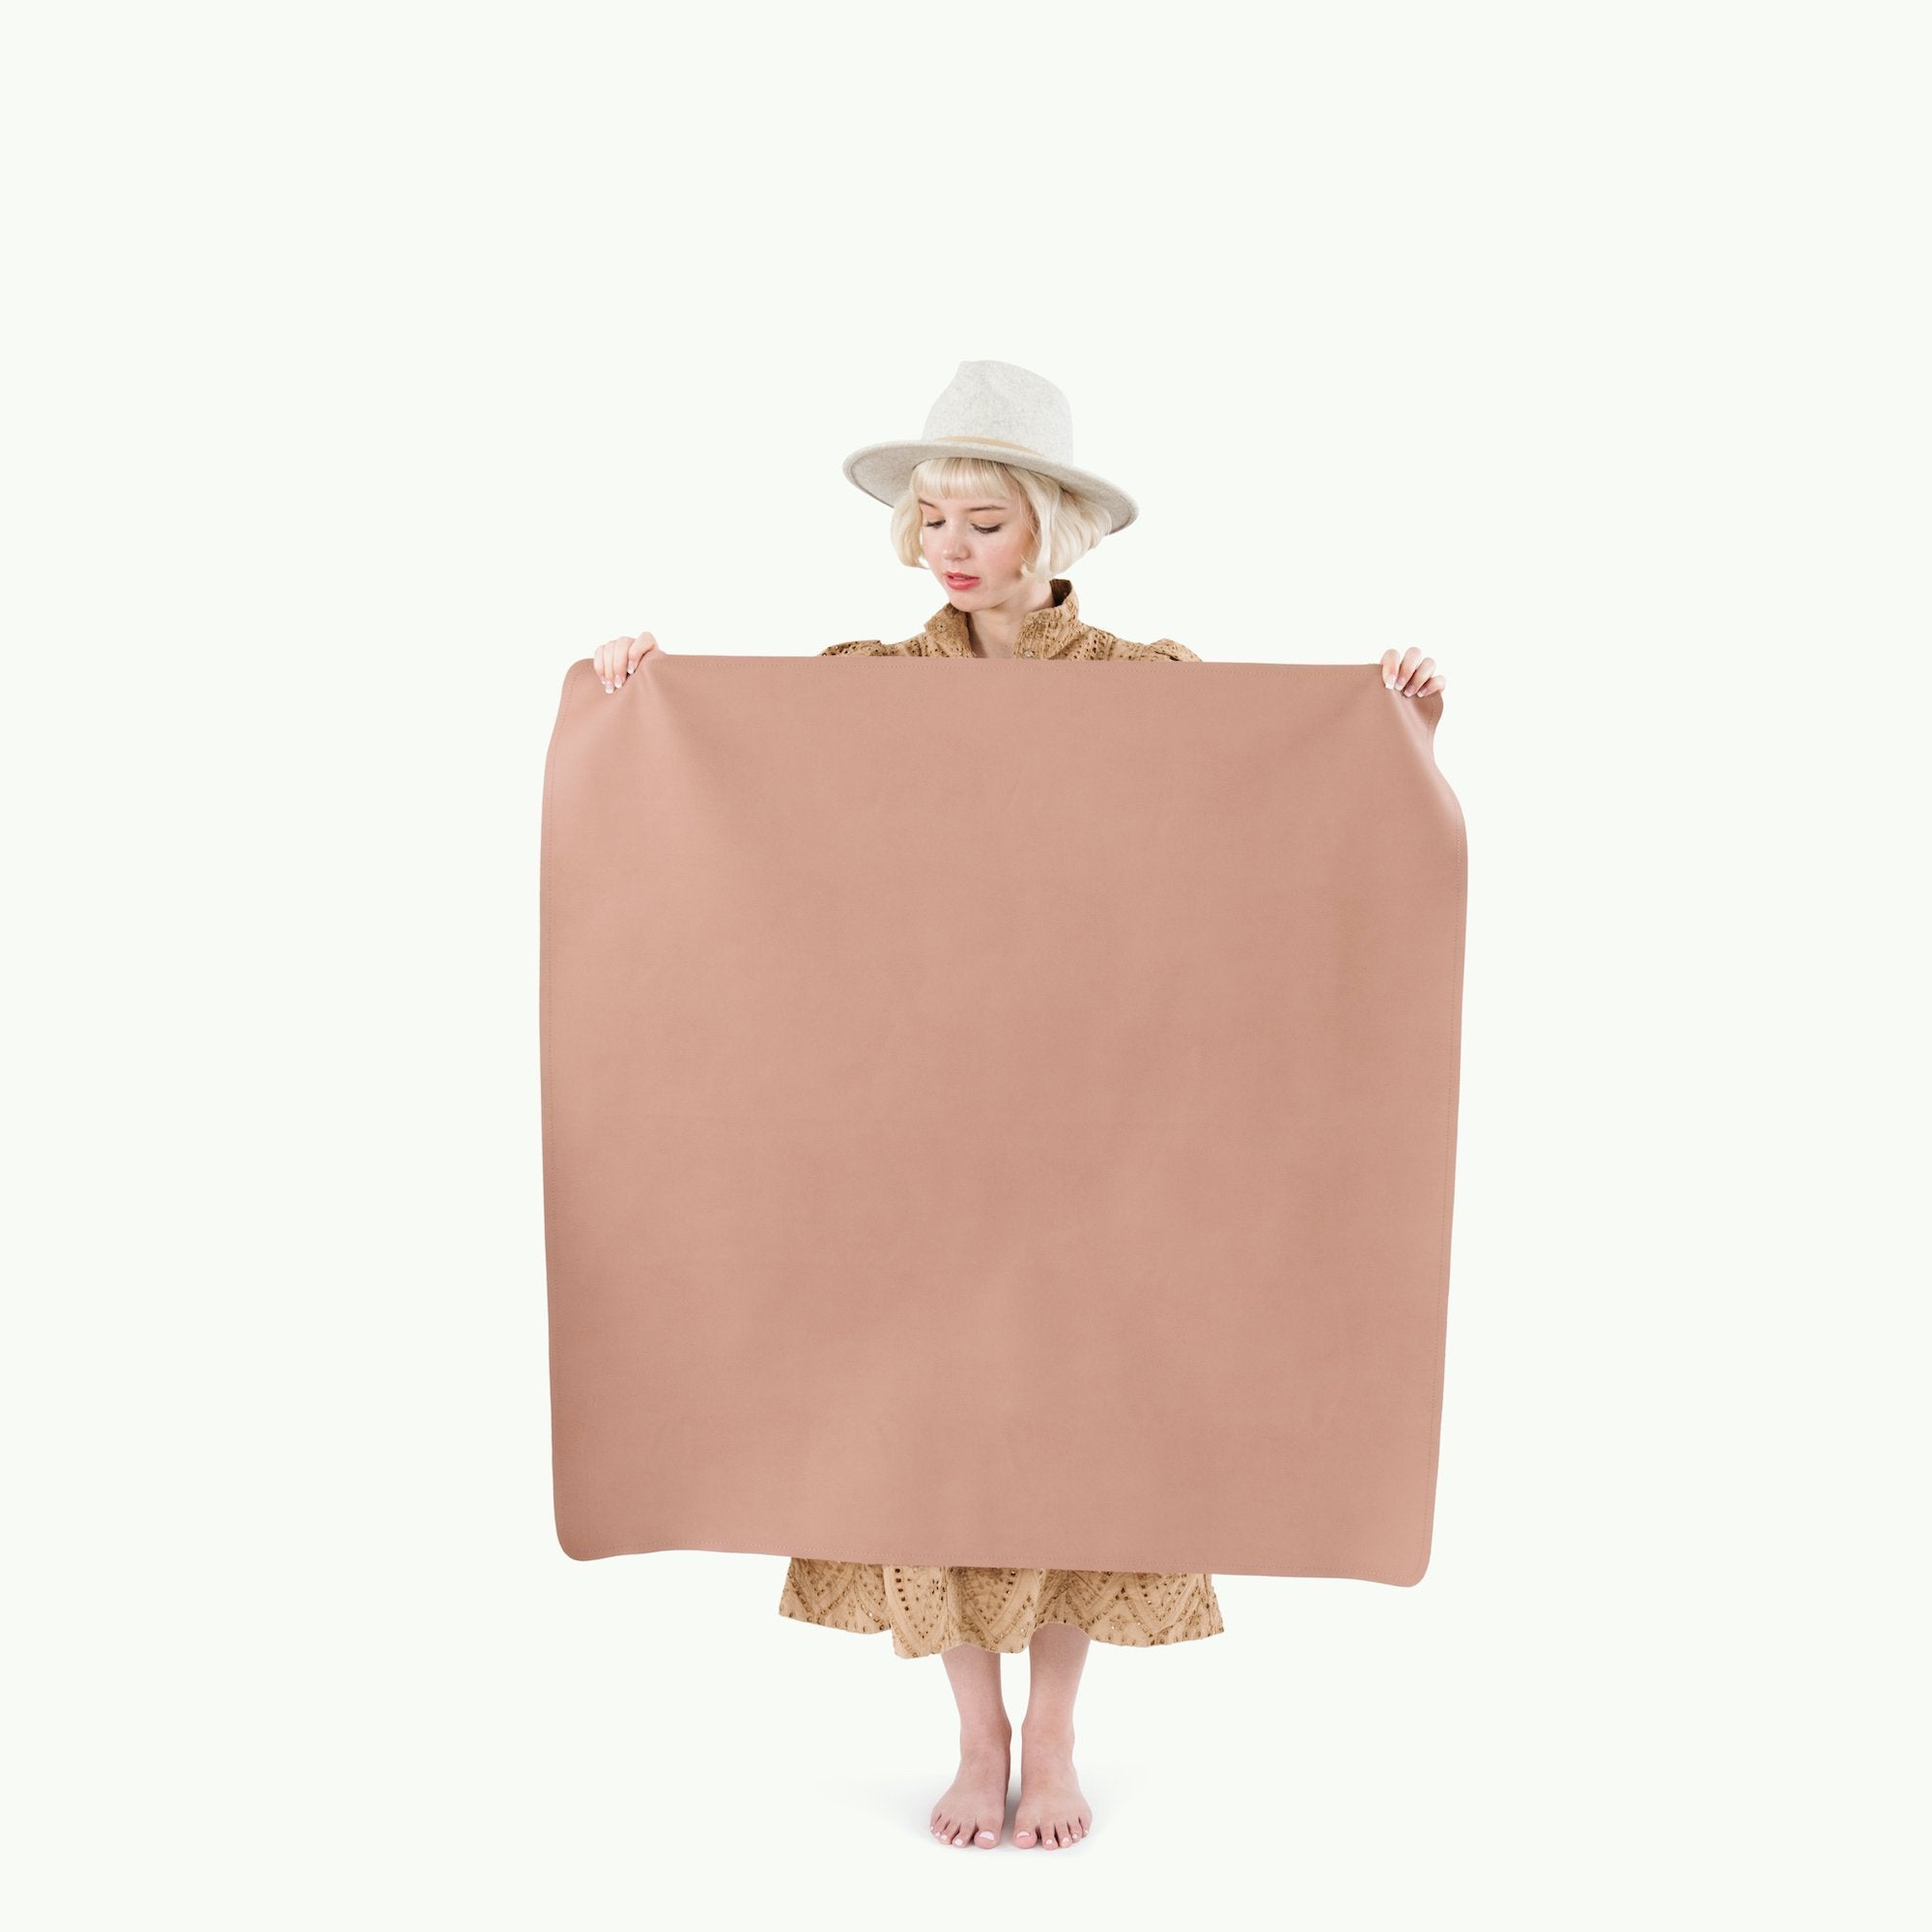 Sienna (on sale)@Woman holding the Sienna Mini Mat